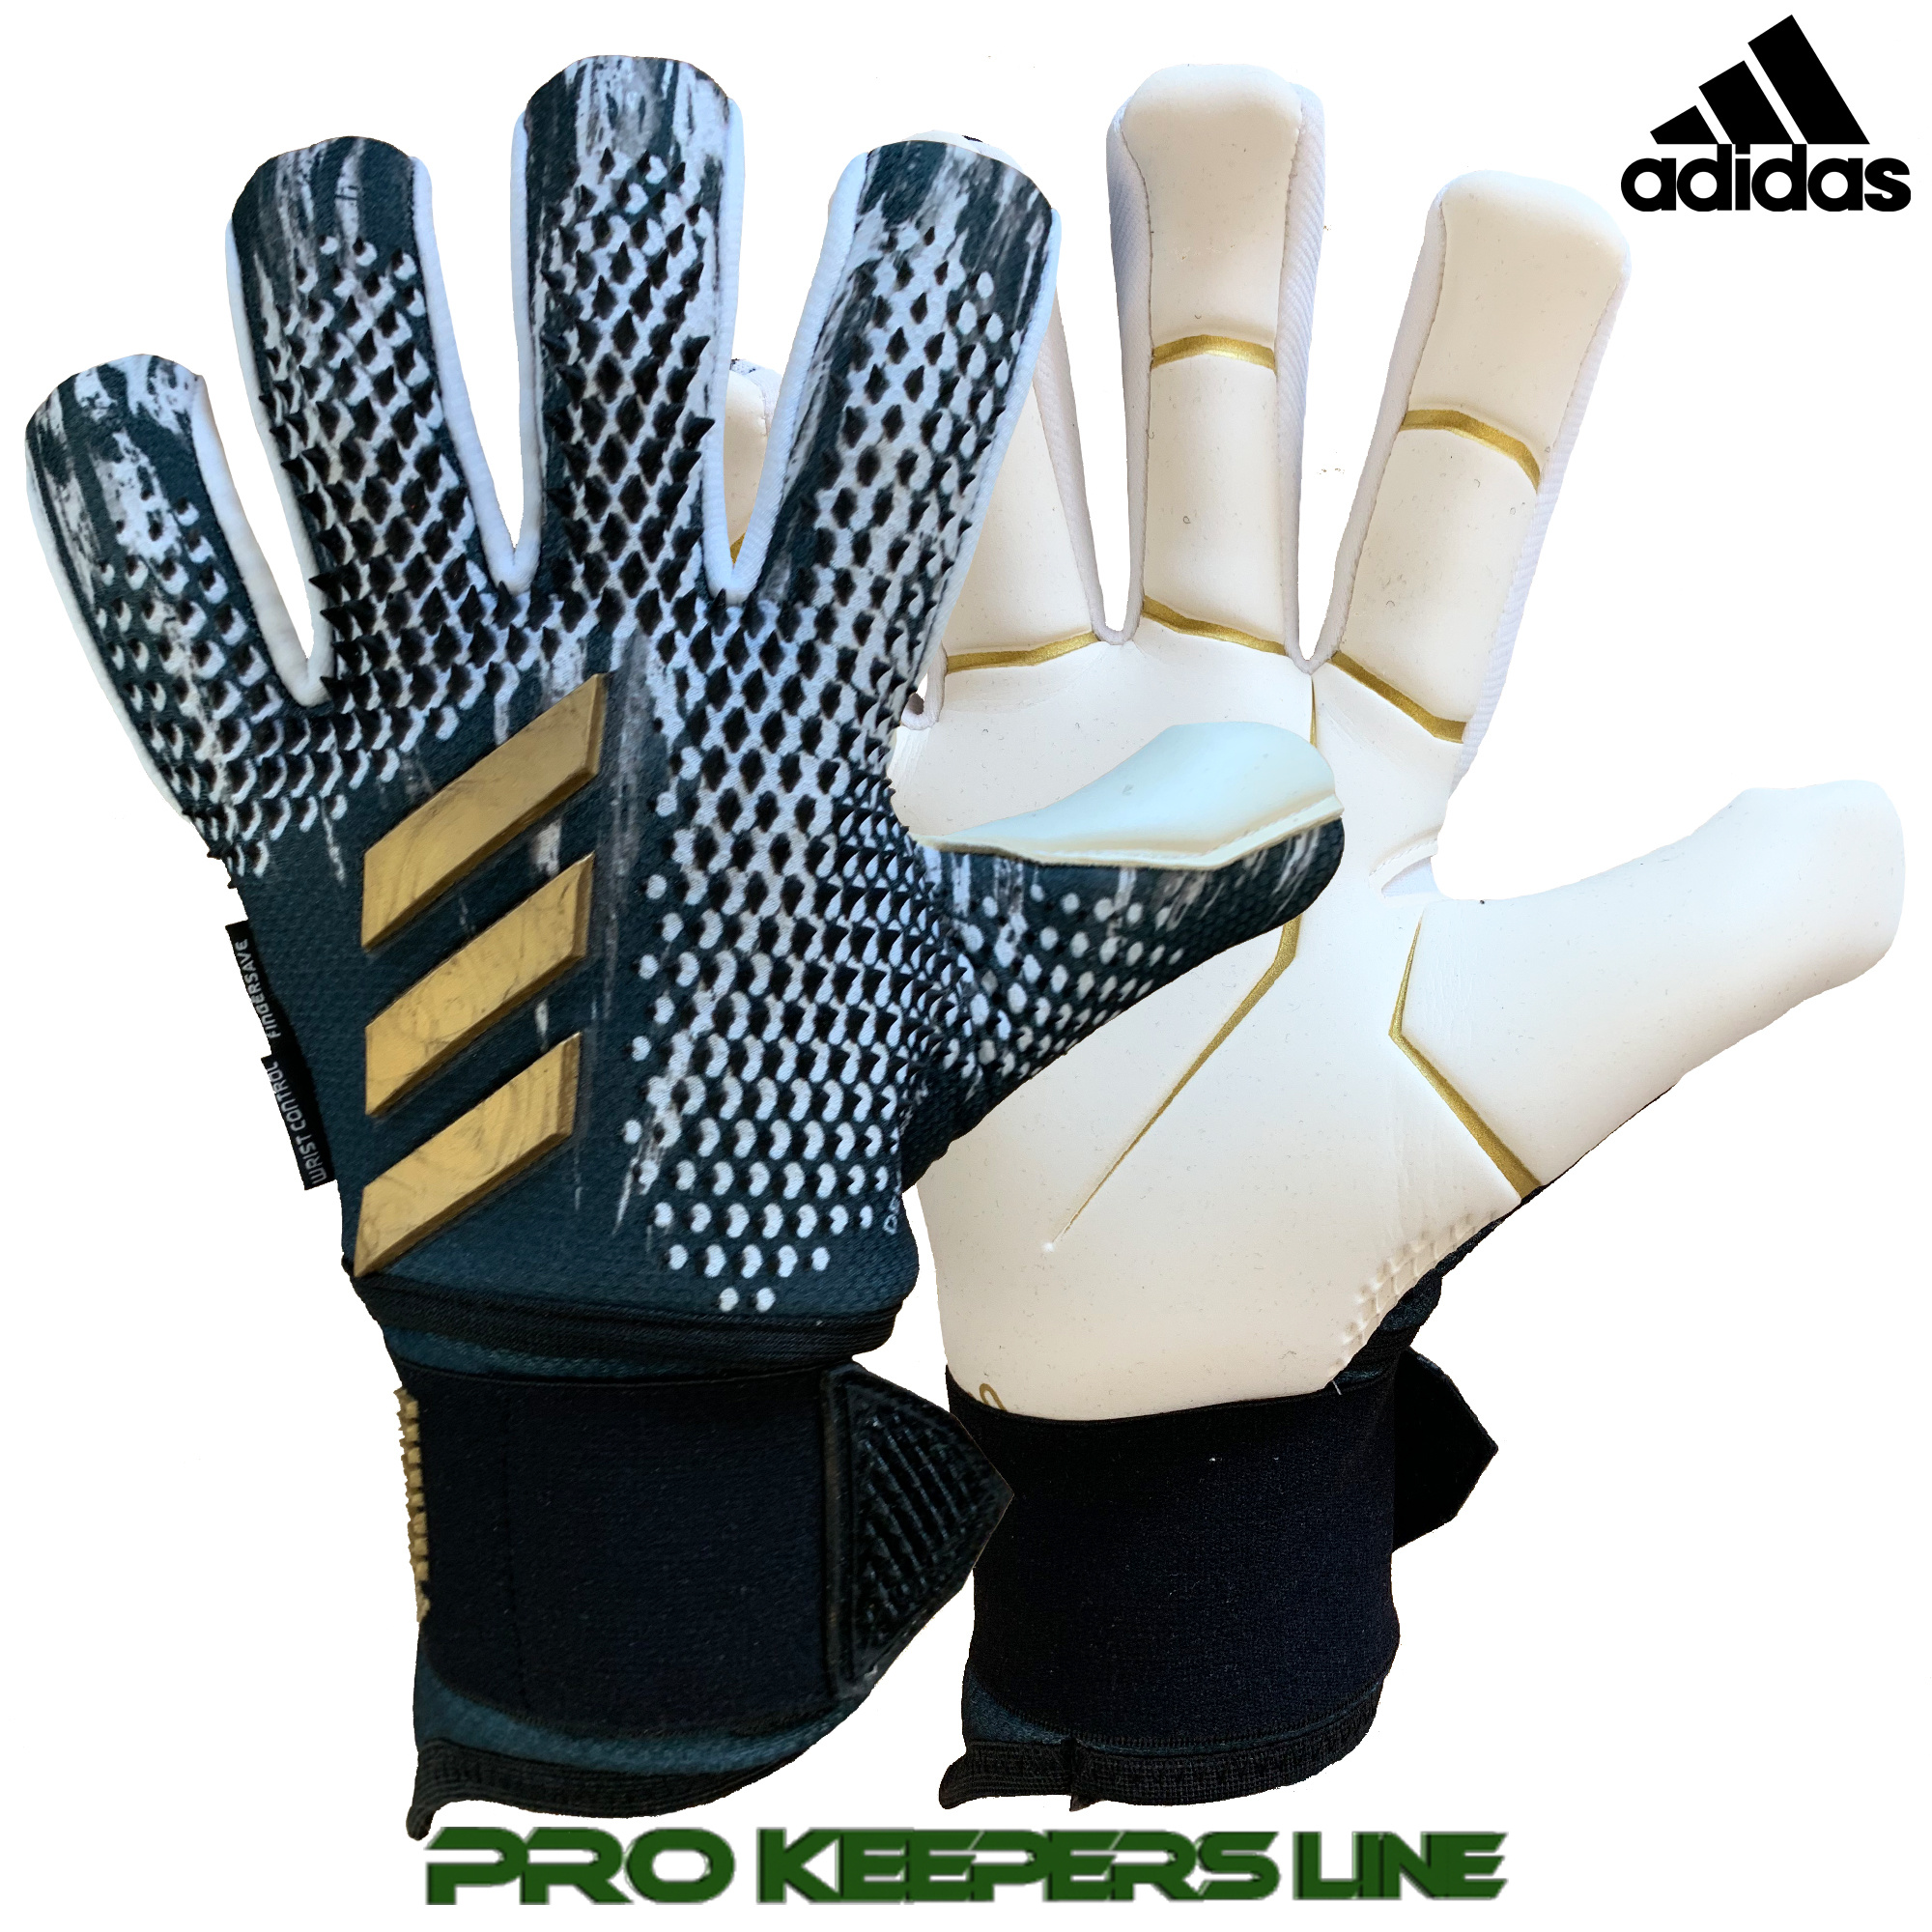 adidas predator pro ultimate goalkeeper gloves